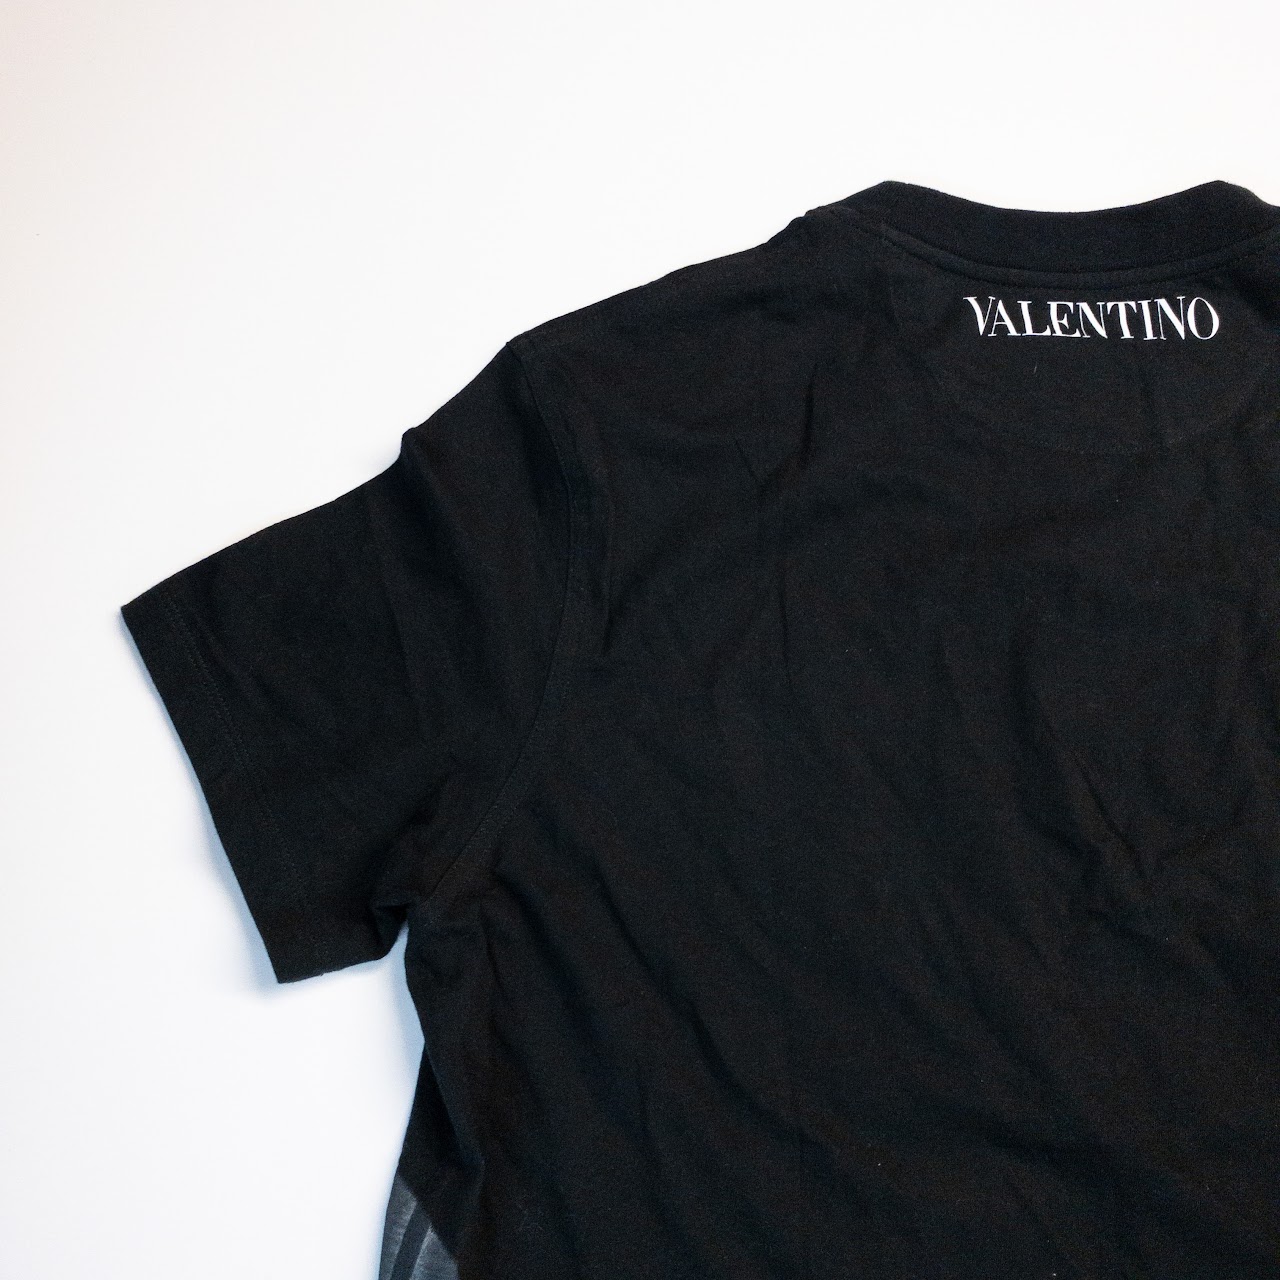 Valentino Astronaut T-Shirt